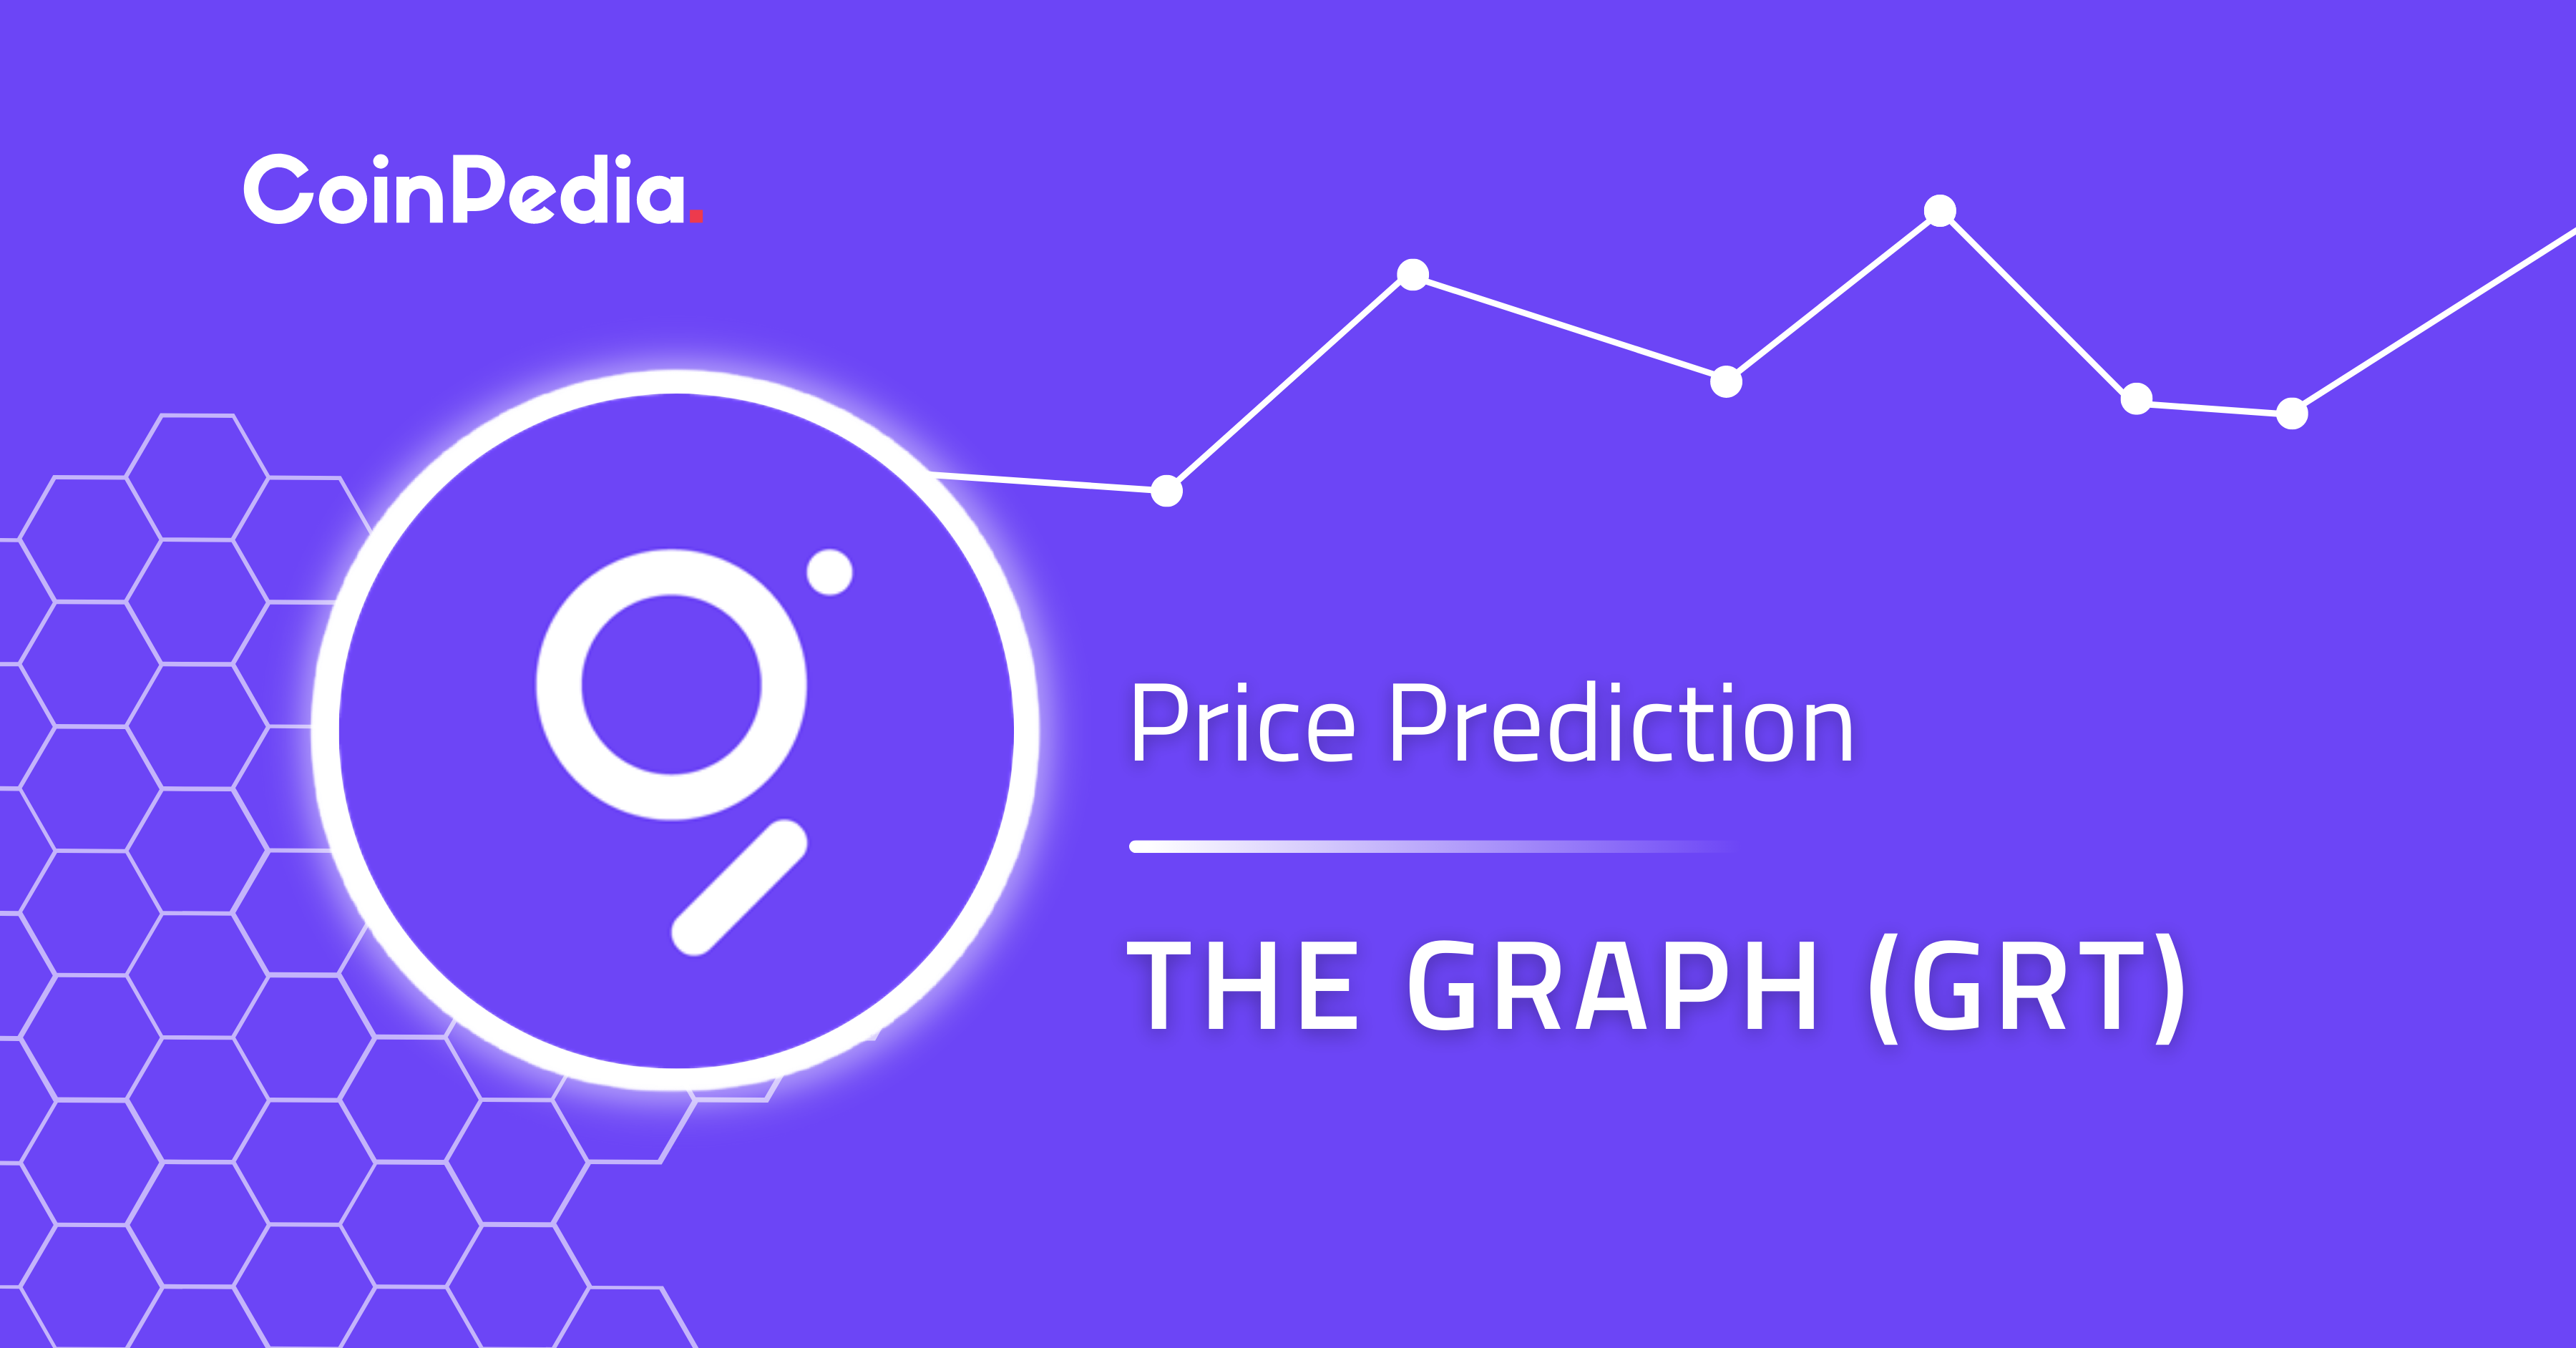 grt crypto price prediction 2025